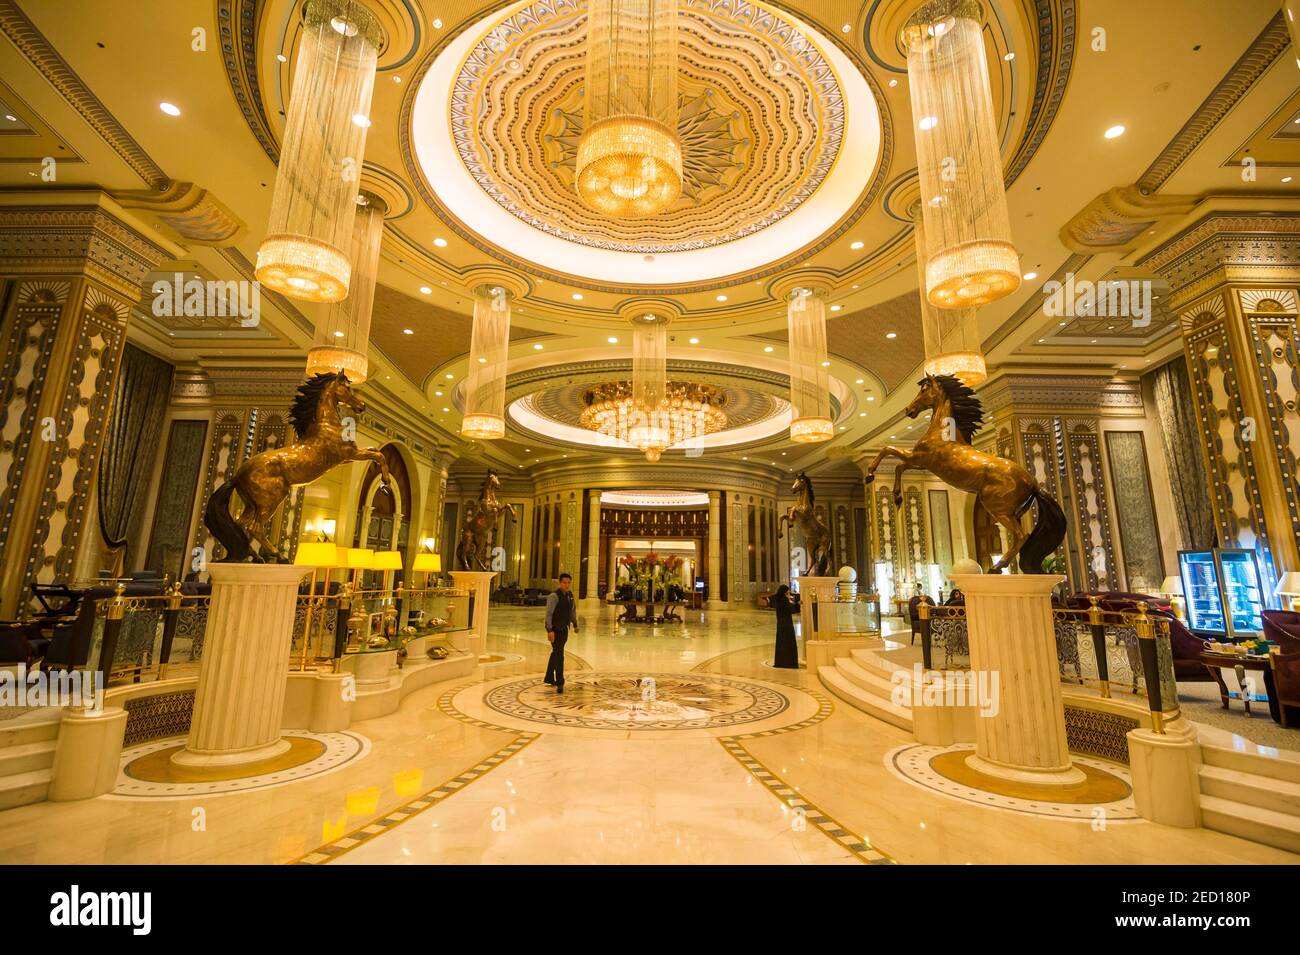 Ritz Carlton Hotel, Riadh, Saudi Arabia Stock Photo